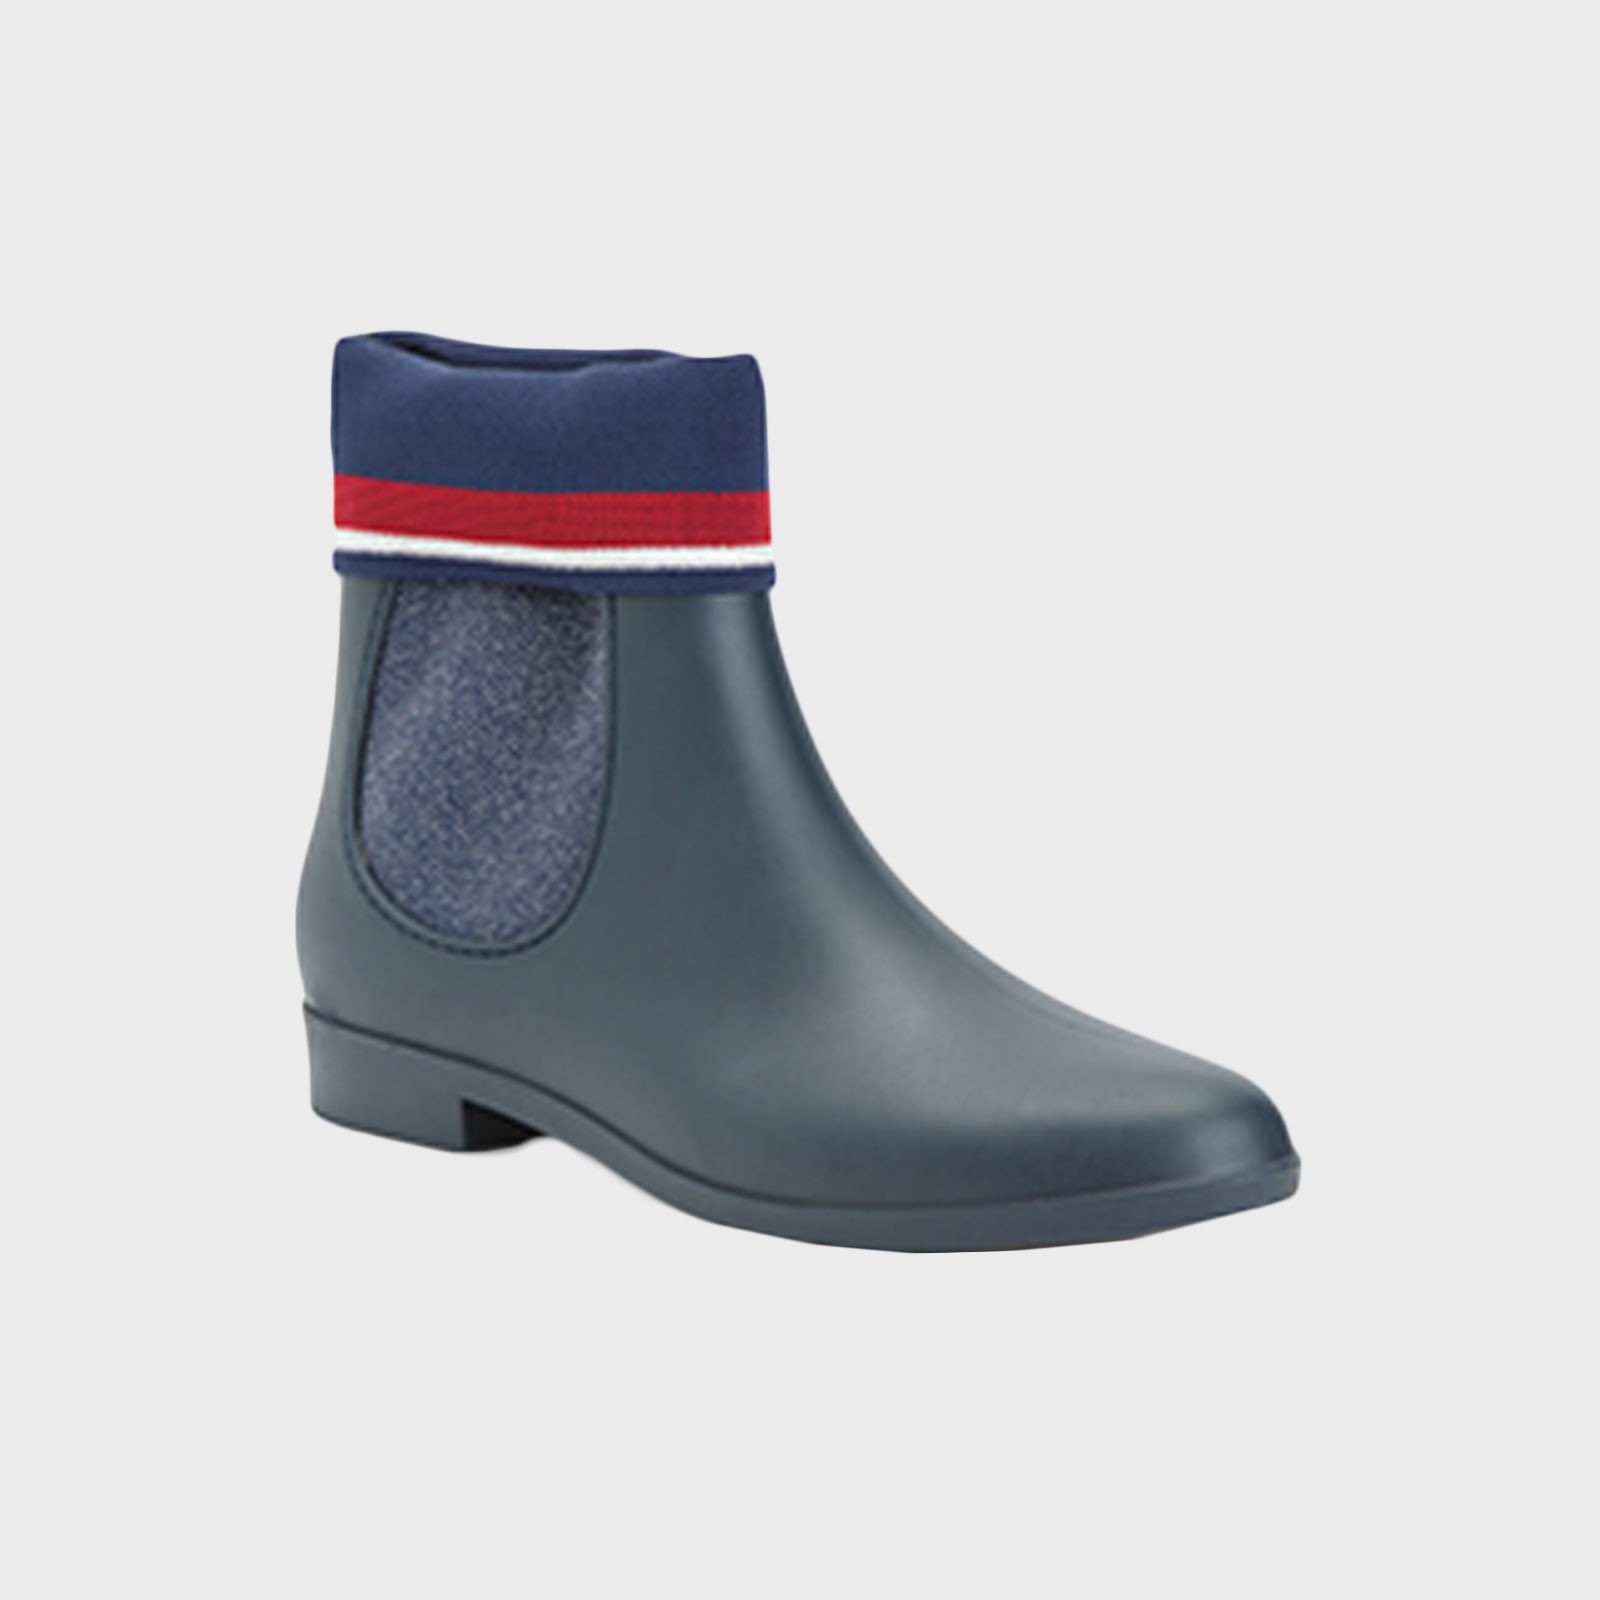 Henry Ferrera Knit Sock Rain Boots Via Marshalls